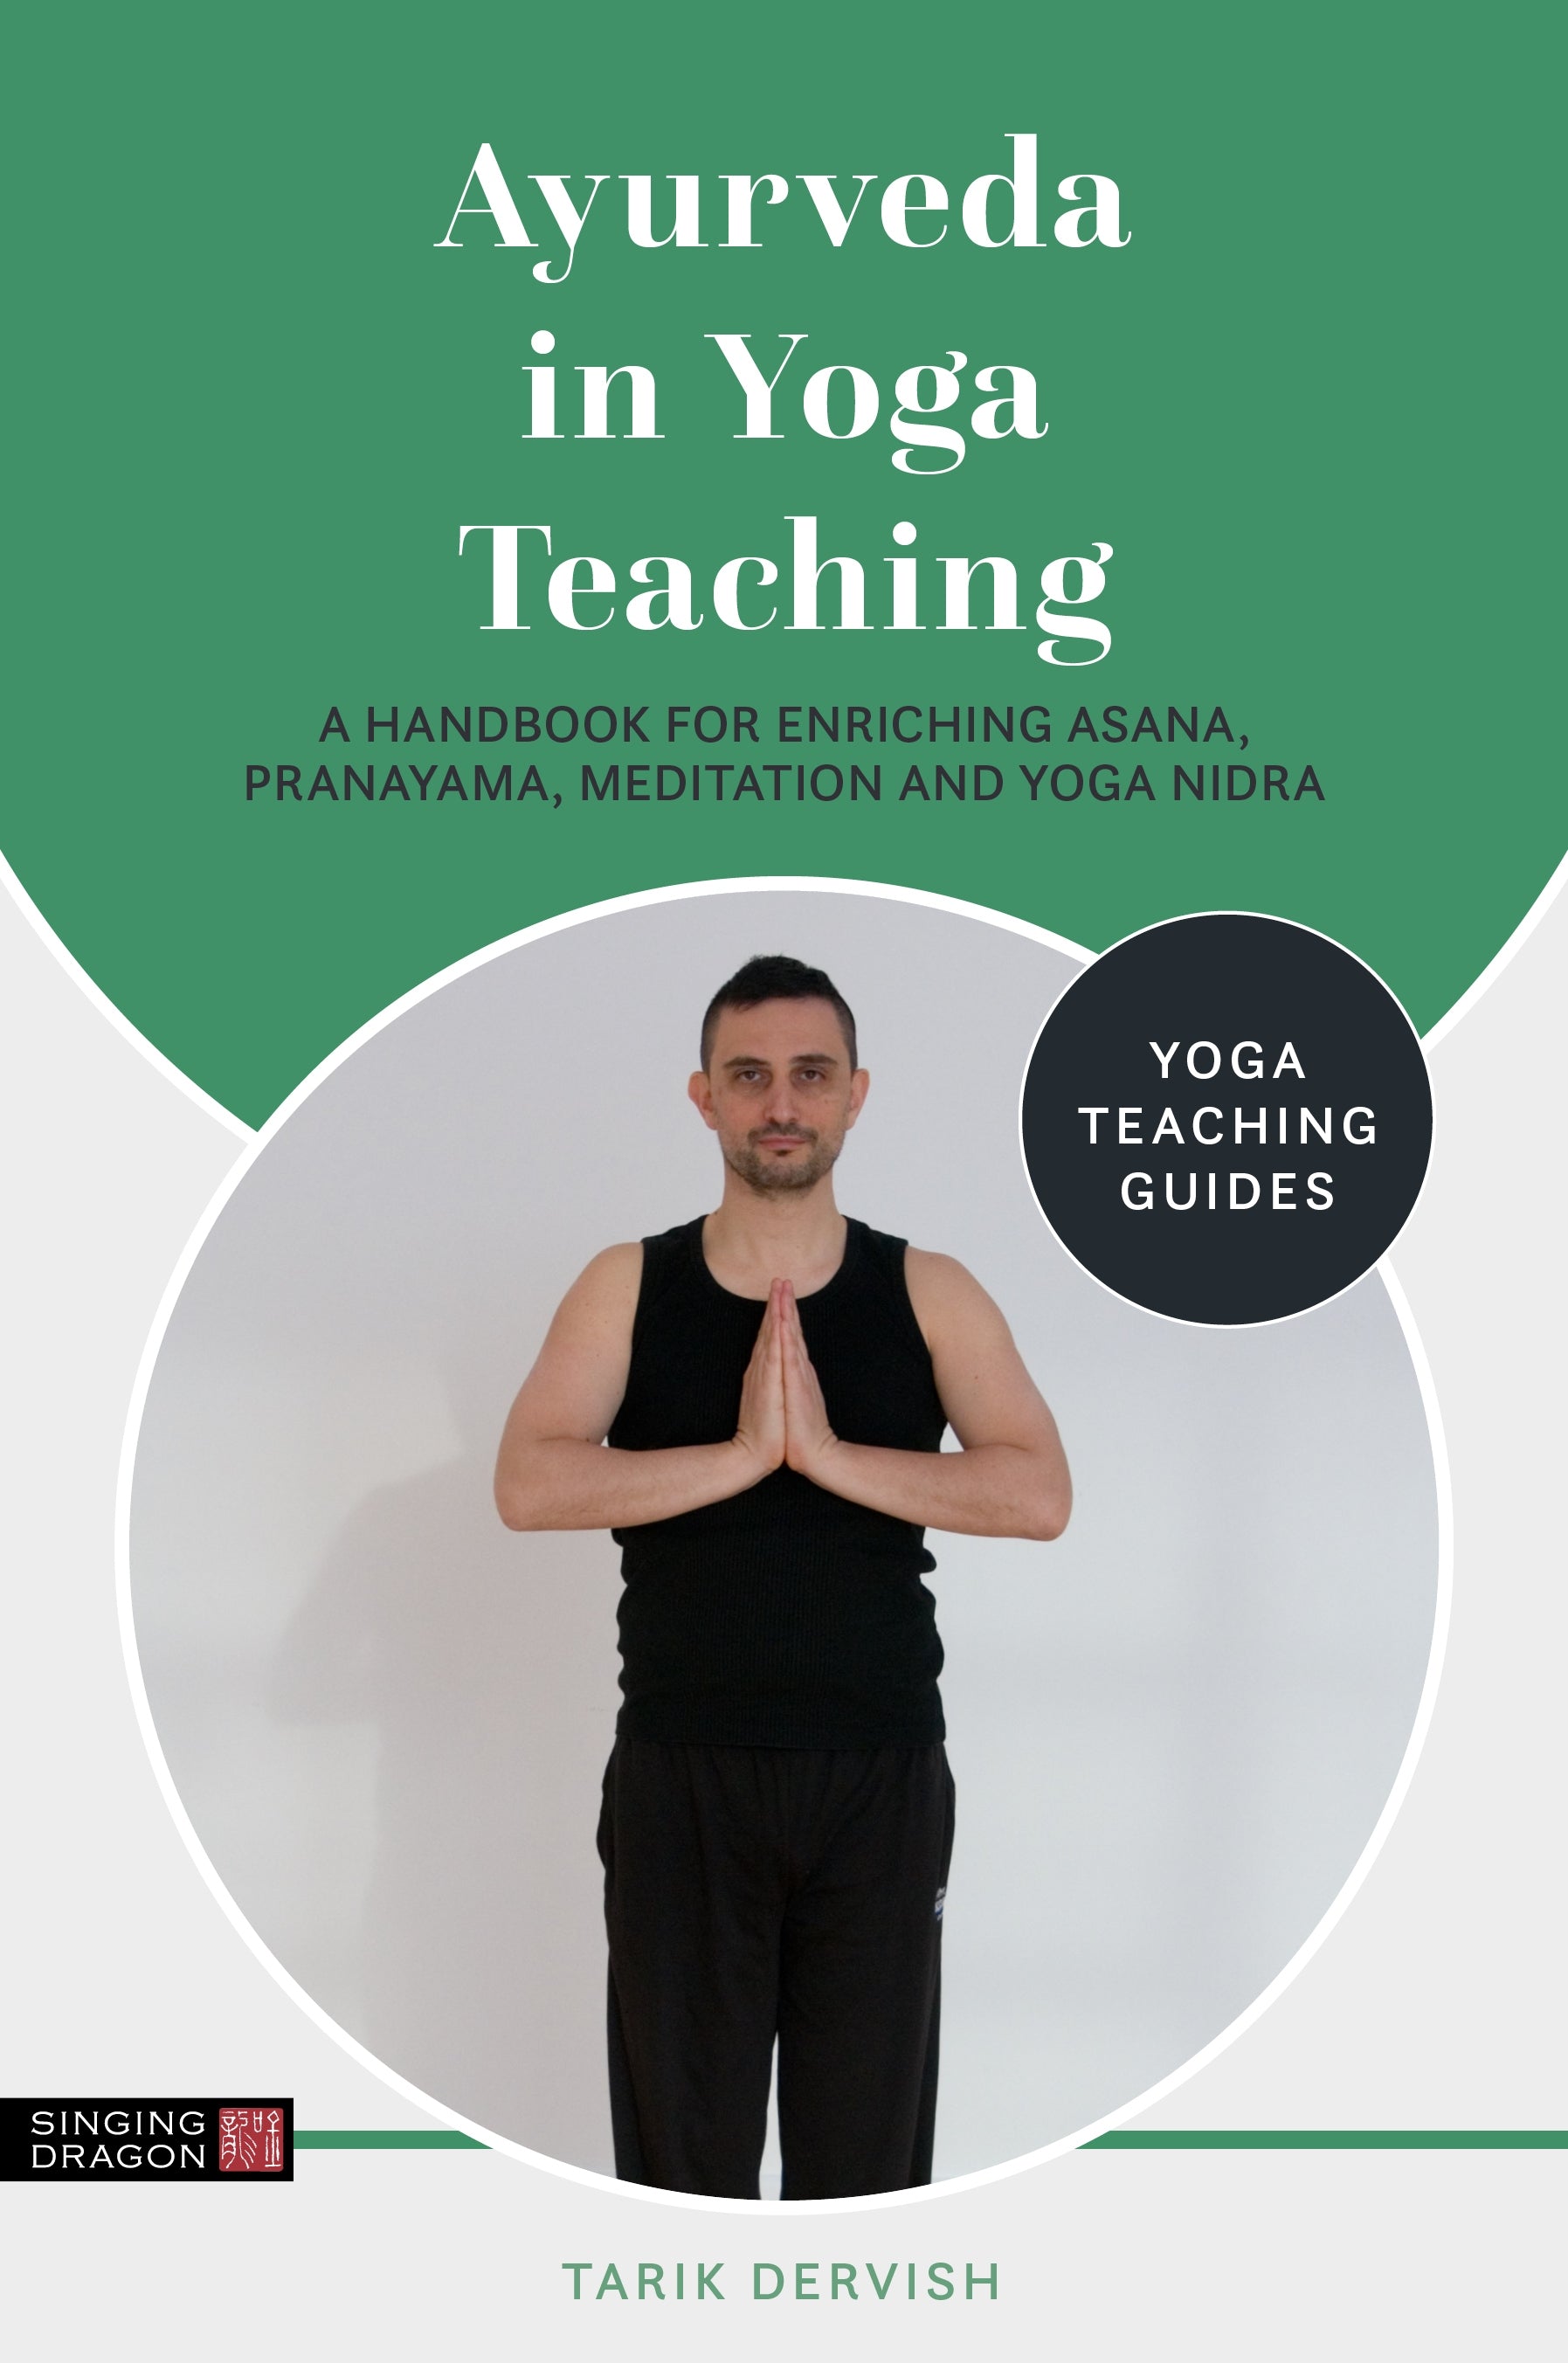 Ayurveda in Yoga Teaching by Masha Pimas, Tarik Dervish